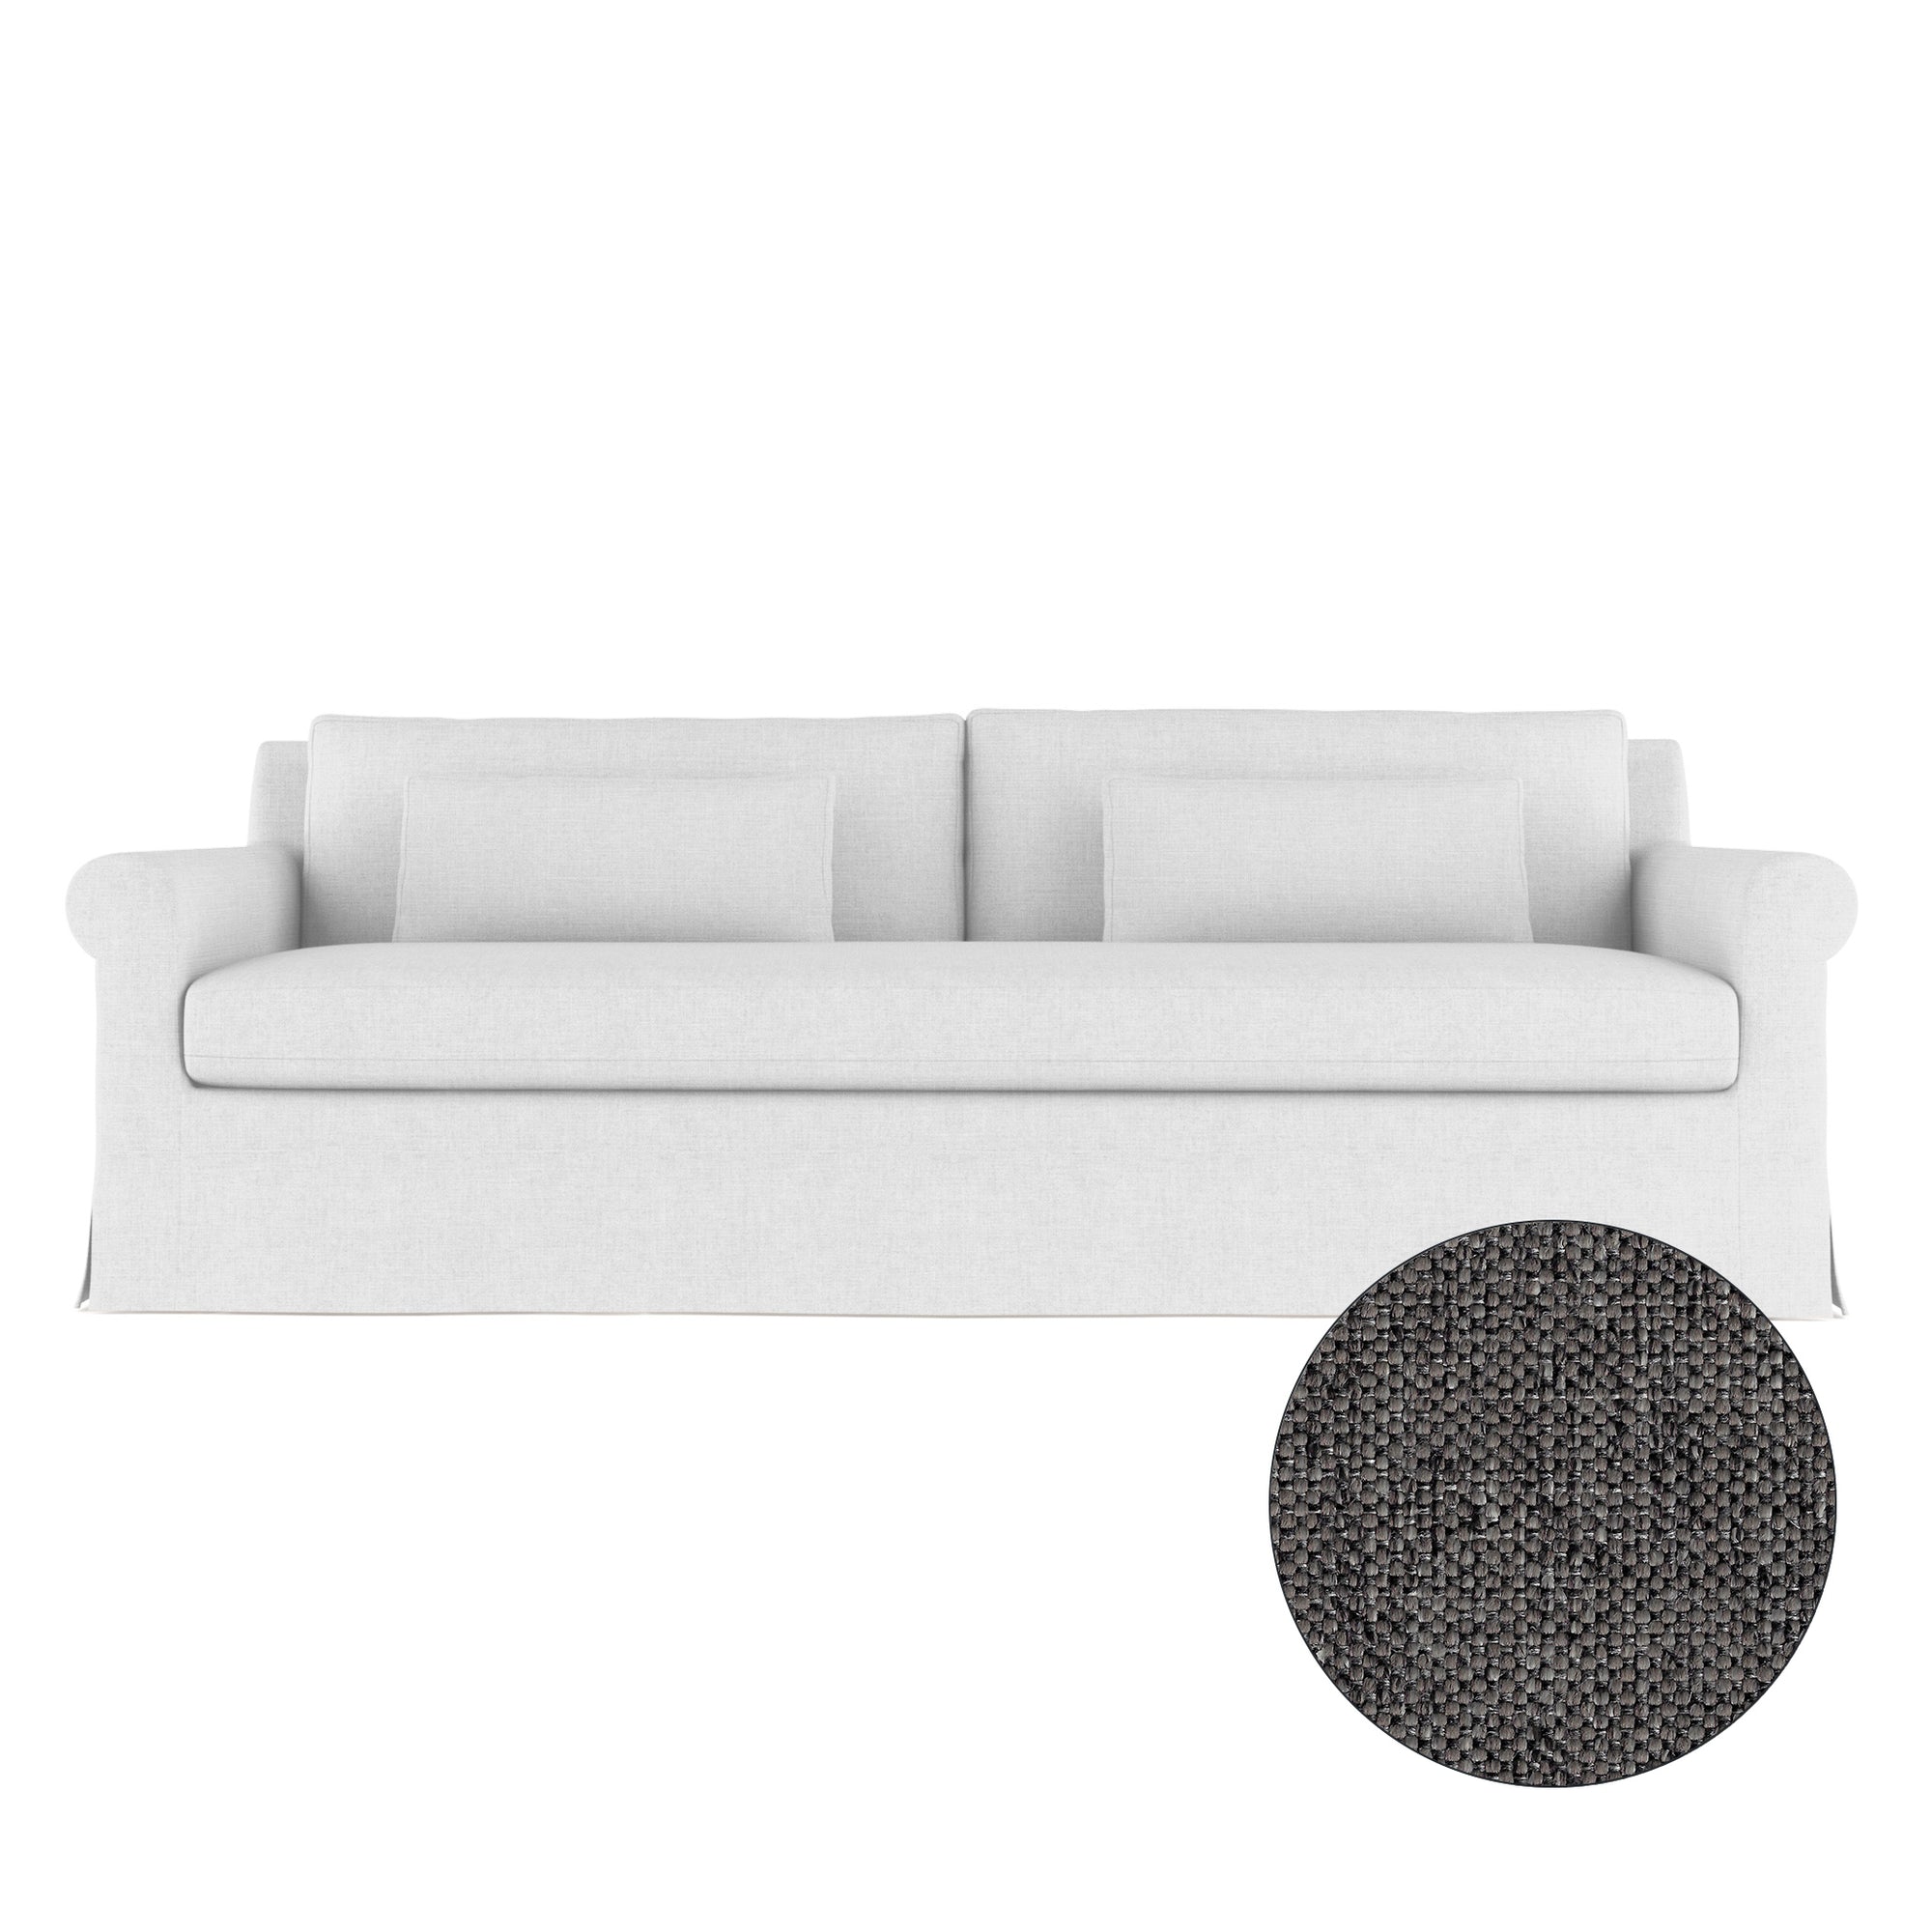 Ludlow Sofa - Graphite Pebble Weave Linen